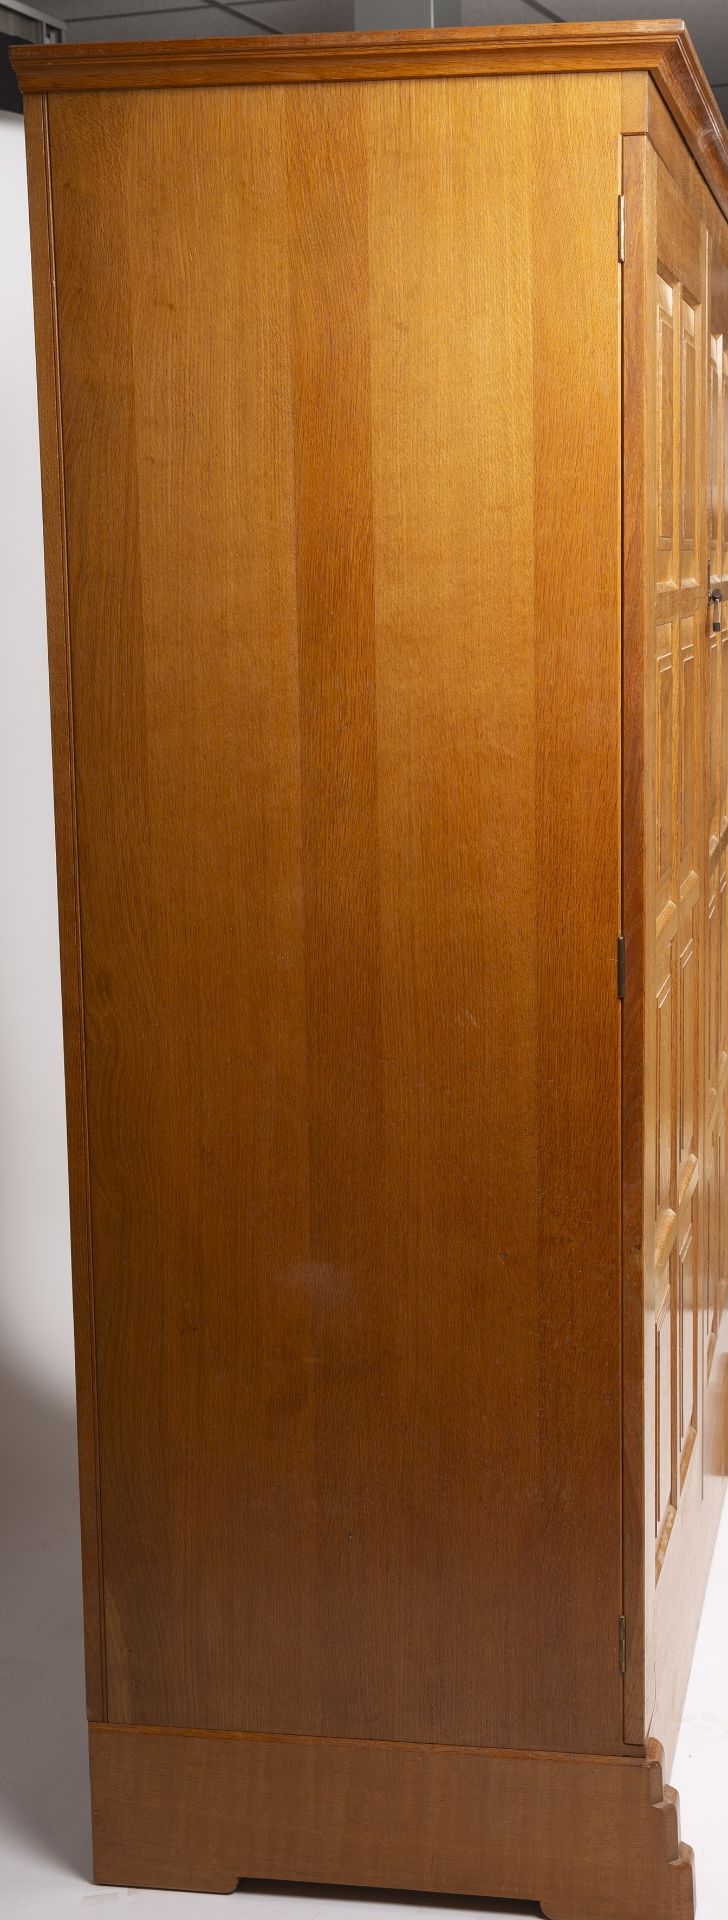 Hugh Birkett (1919-2002) Wardrobe oak, with panelled doors enclosing fitted shelves 181cm high, - Image 6 of 6